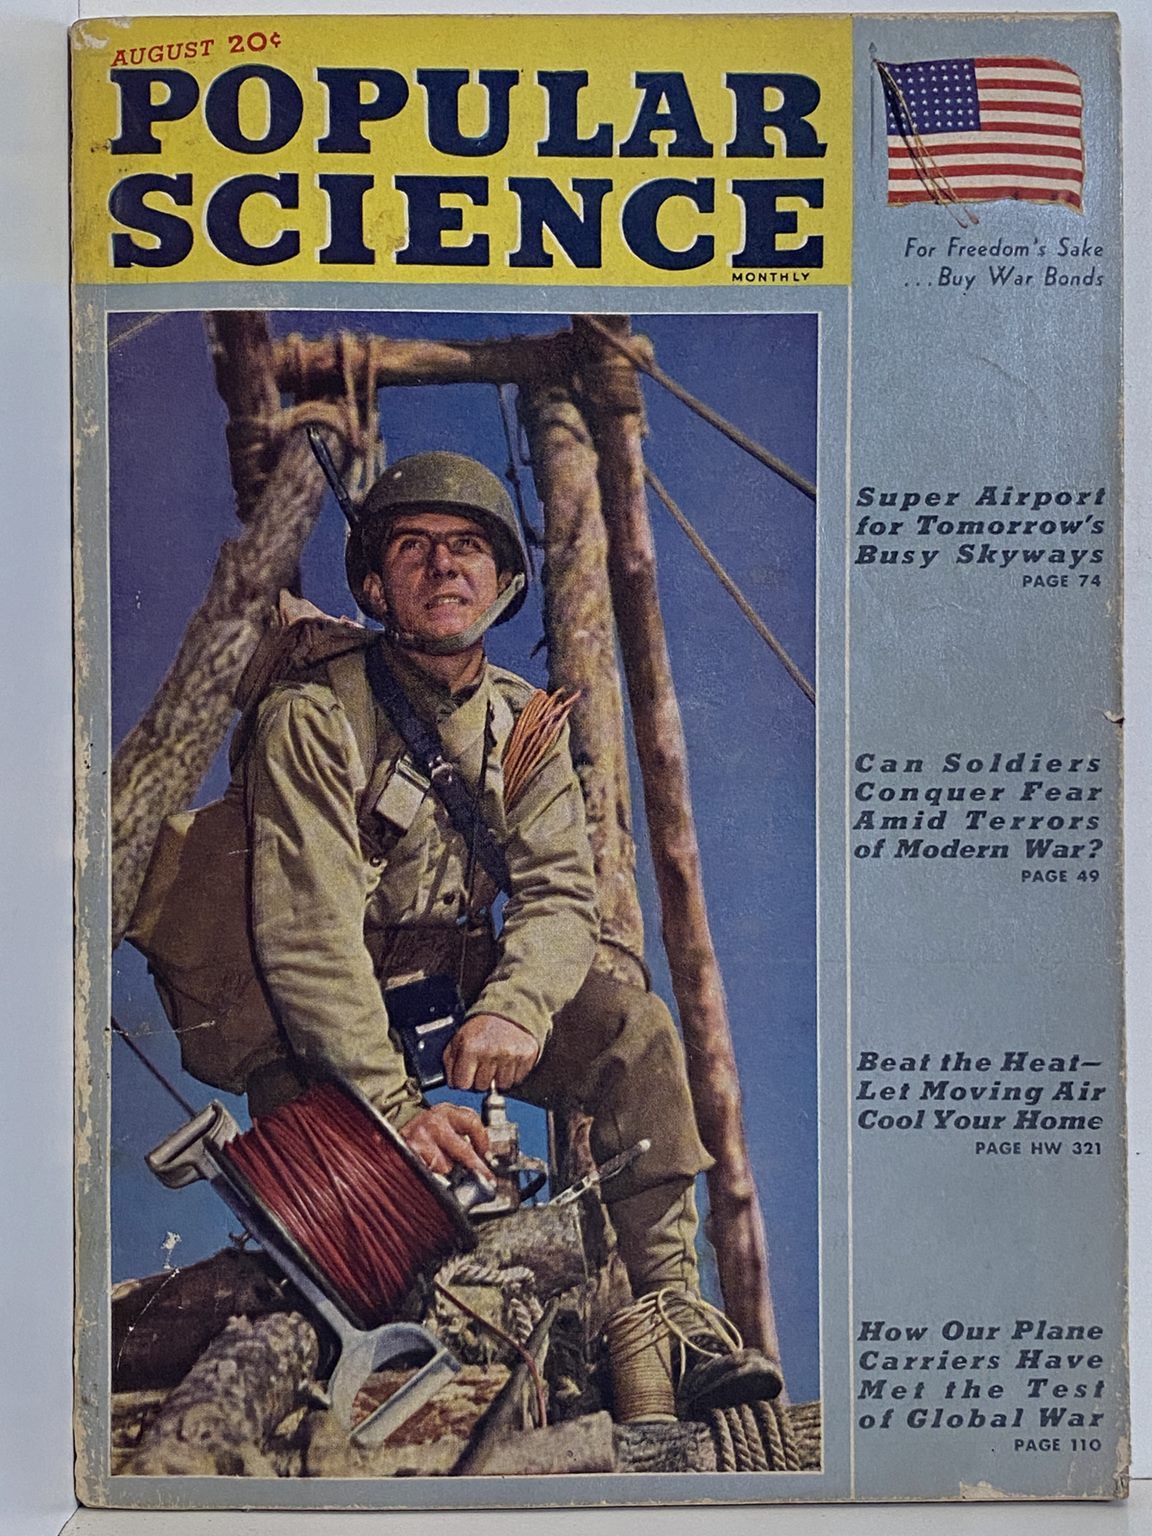 VINTAGE MAGAZINE: Popular Science, Vol. 143, No. 2 - August 1943